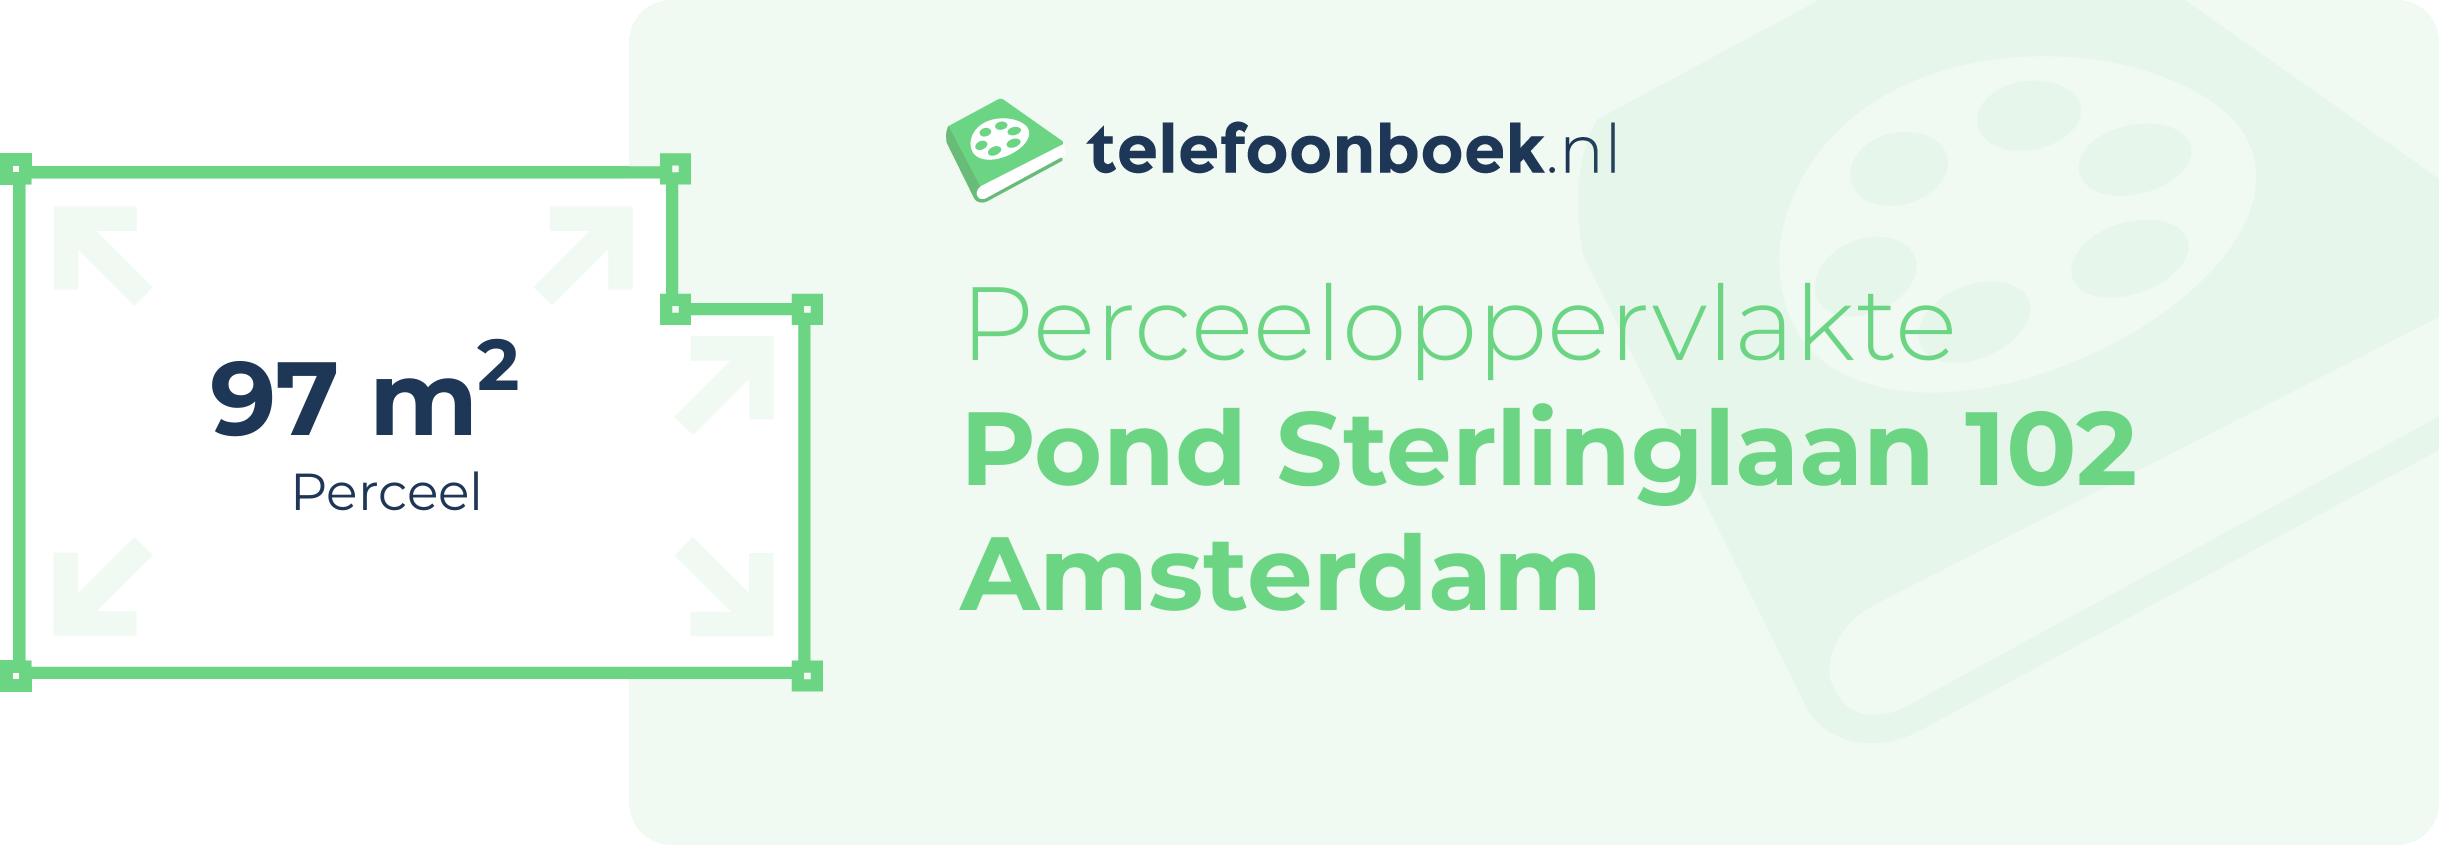 Perceeloppervlakte Pond Sterlinglaan 102 Amsterdam